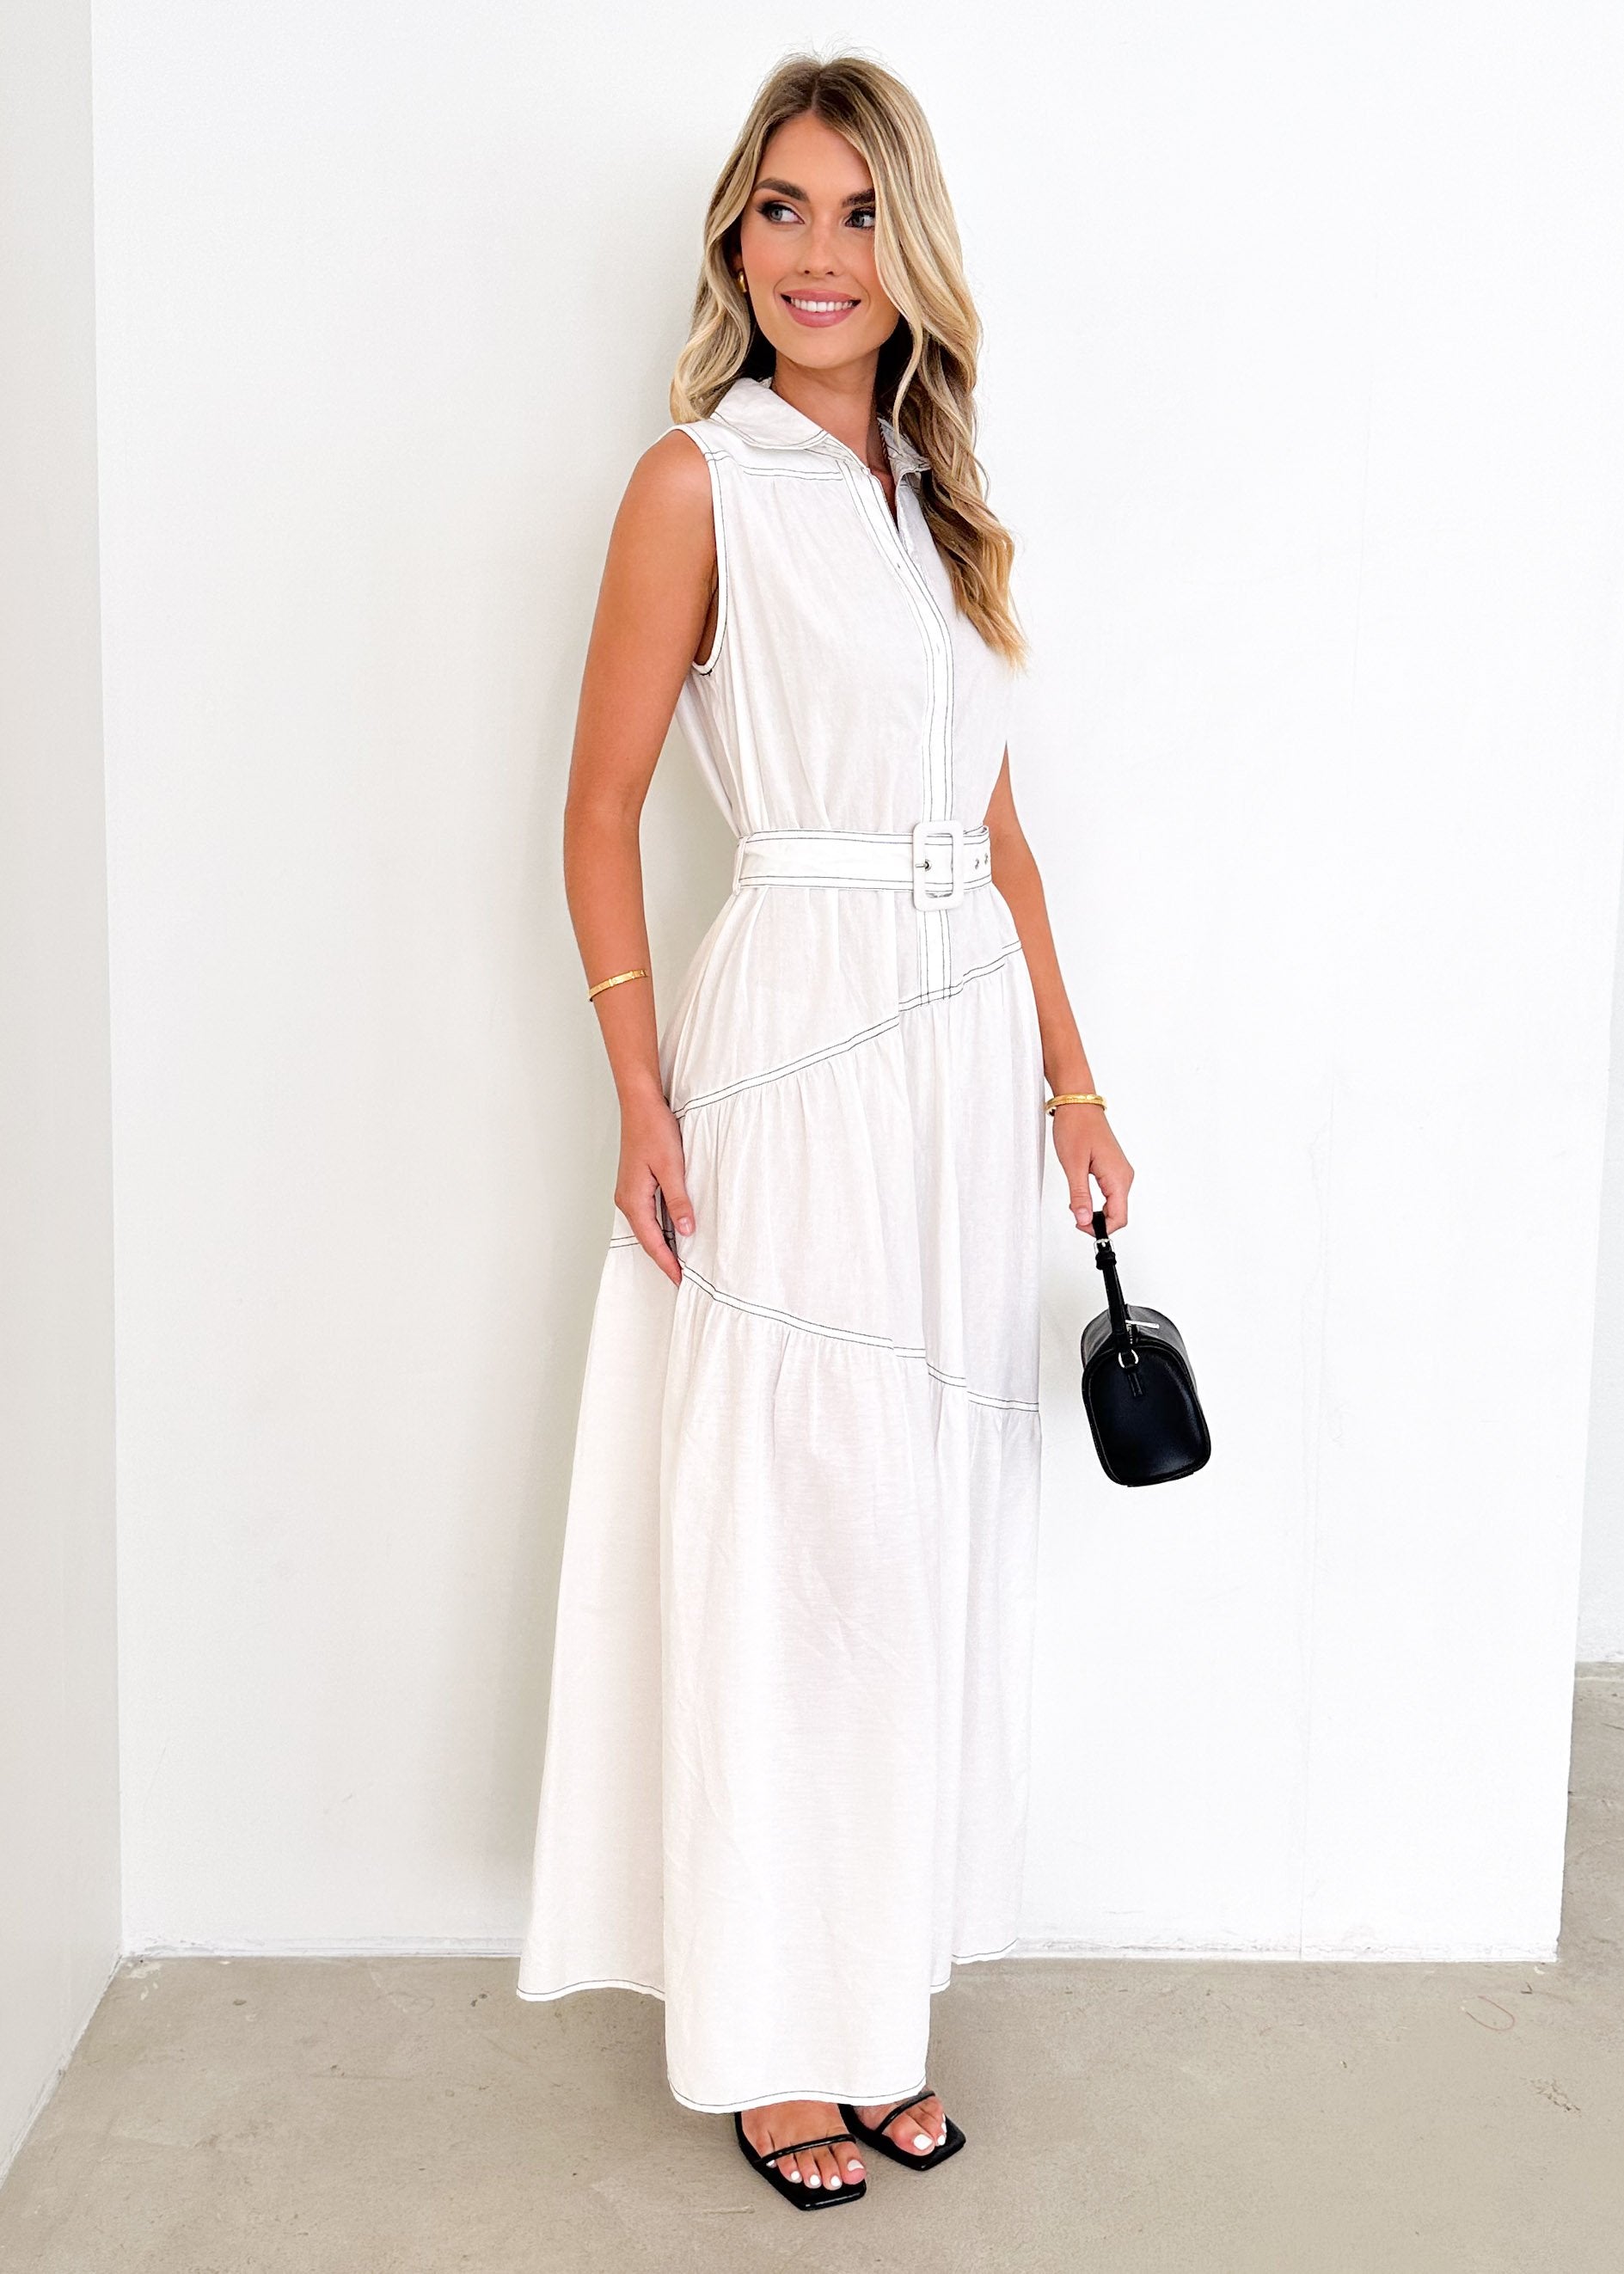 Adoria Maxi Dress - Off White